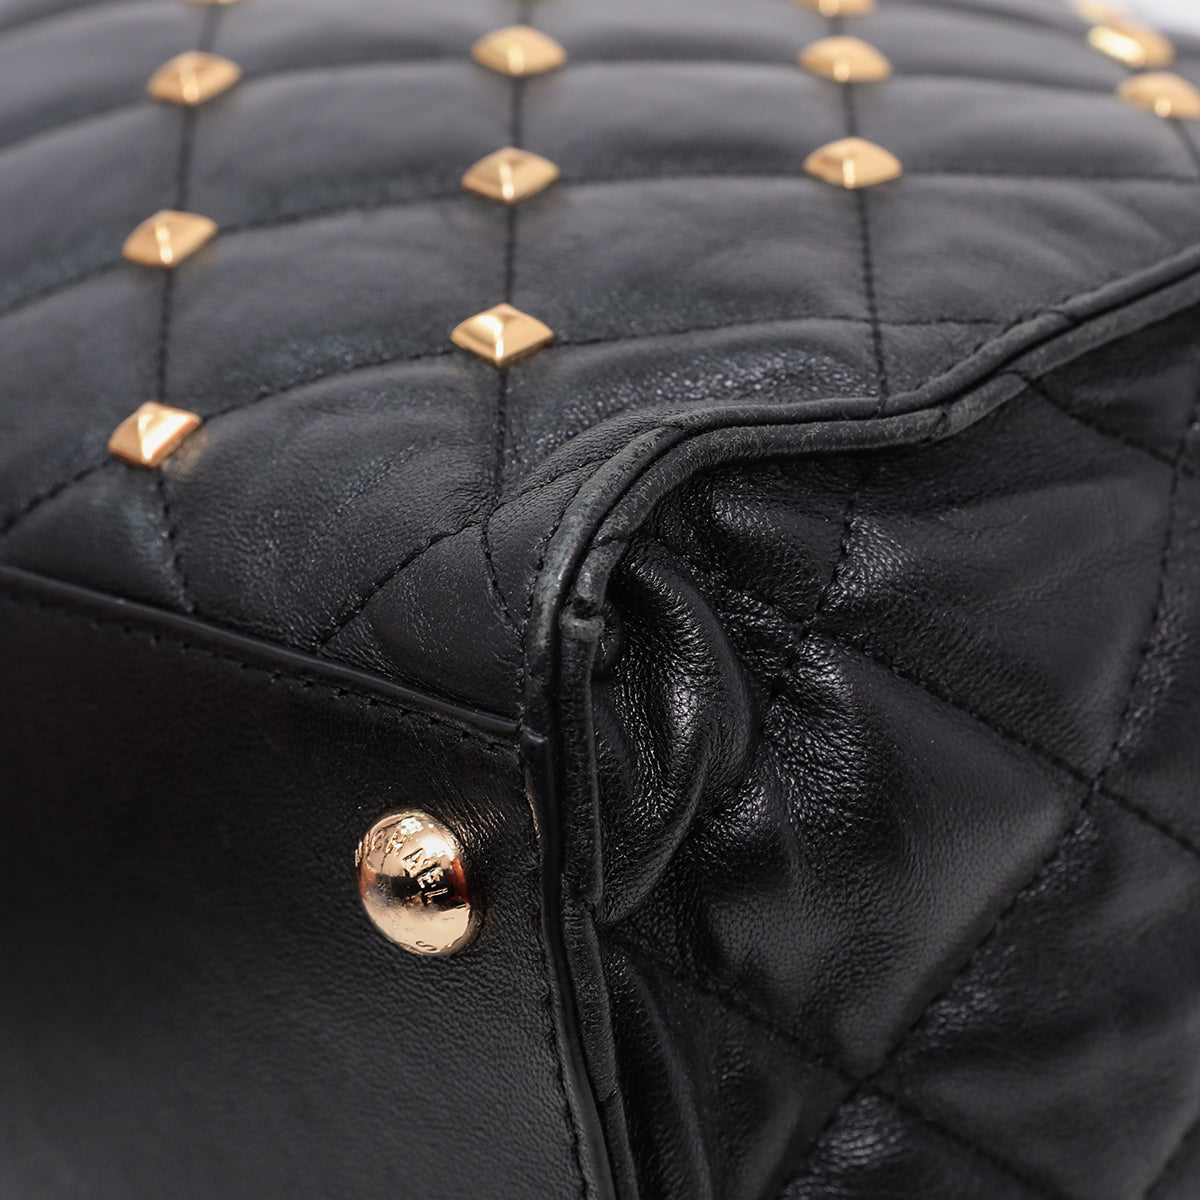 Michael Kors Black Studded Hamilton Bag